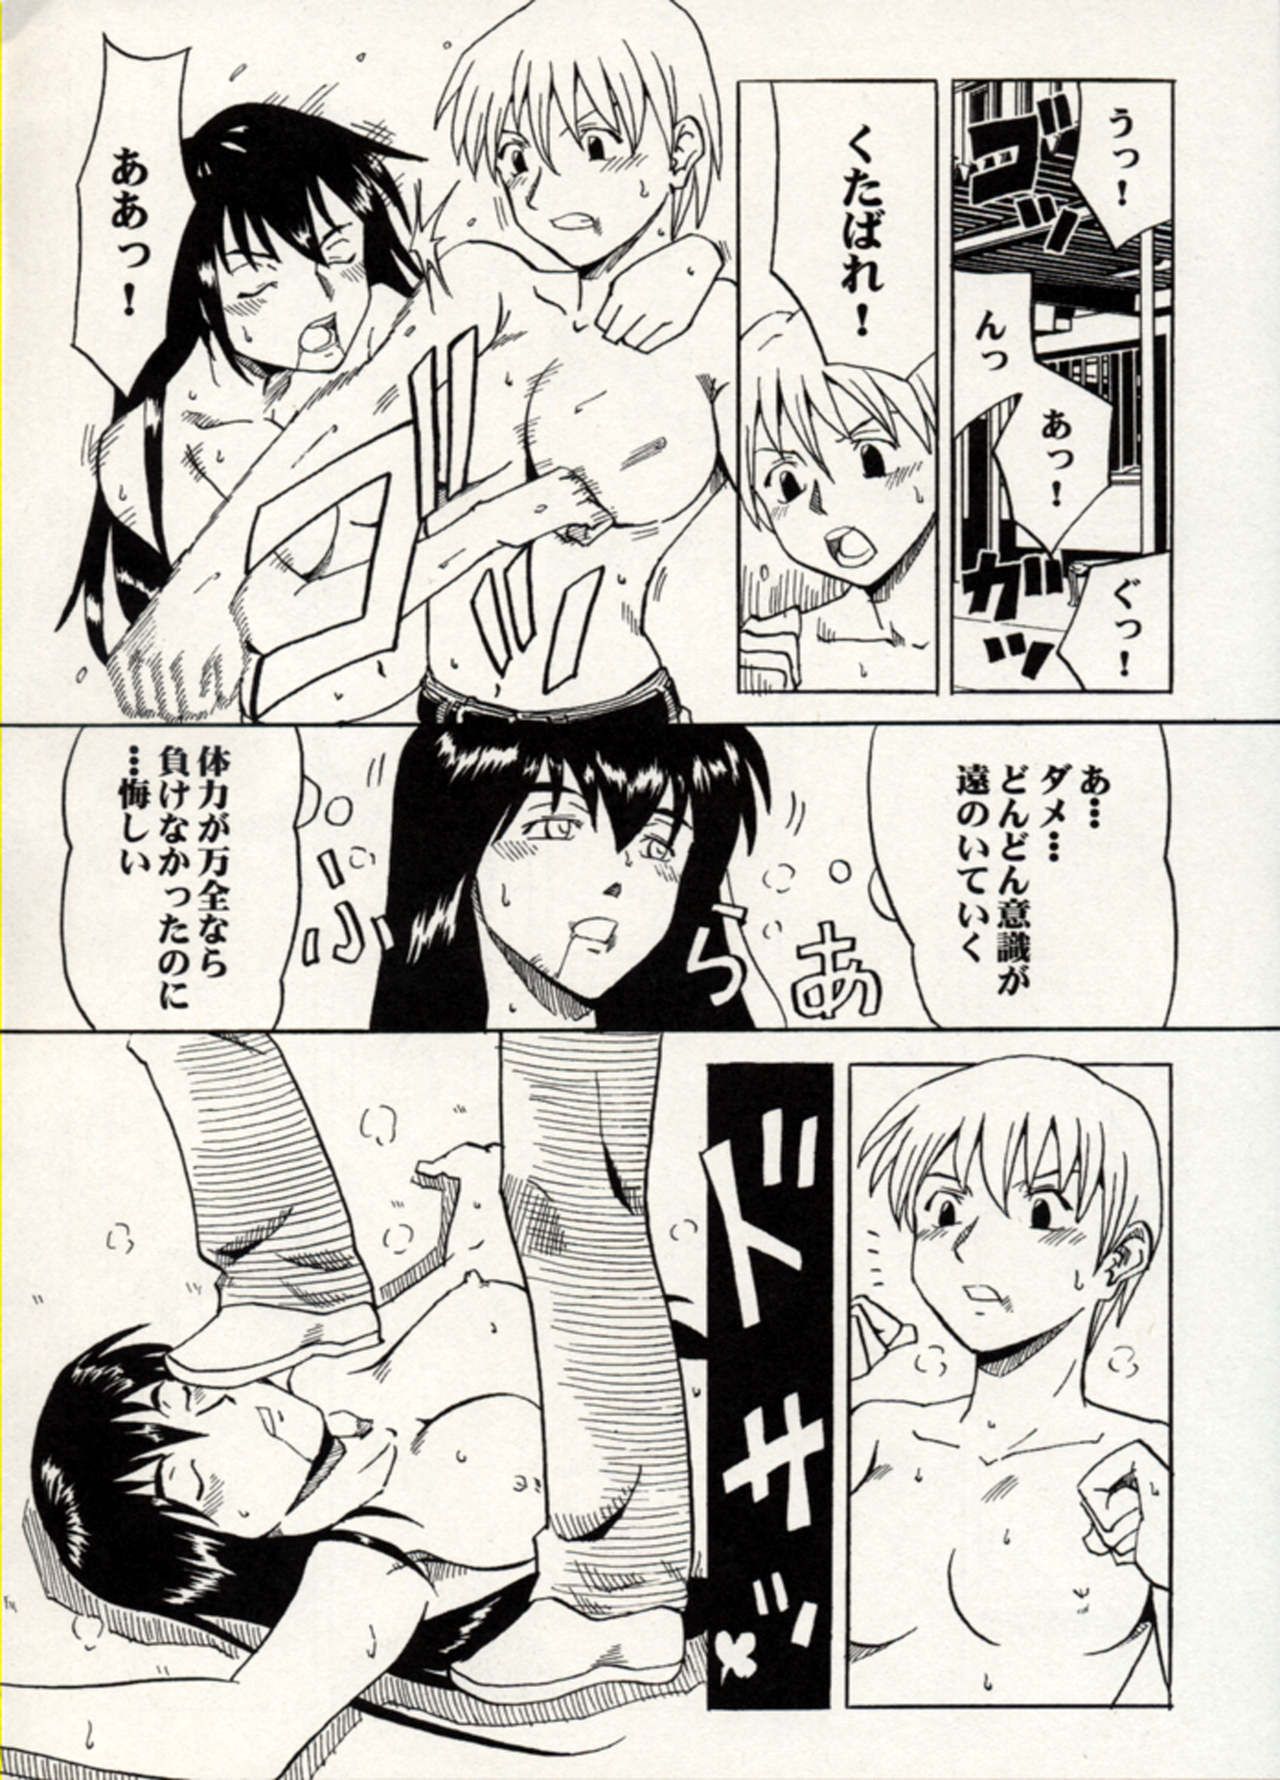 Manga Battle Volume 15 52